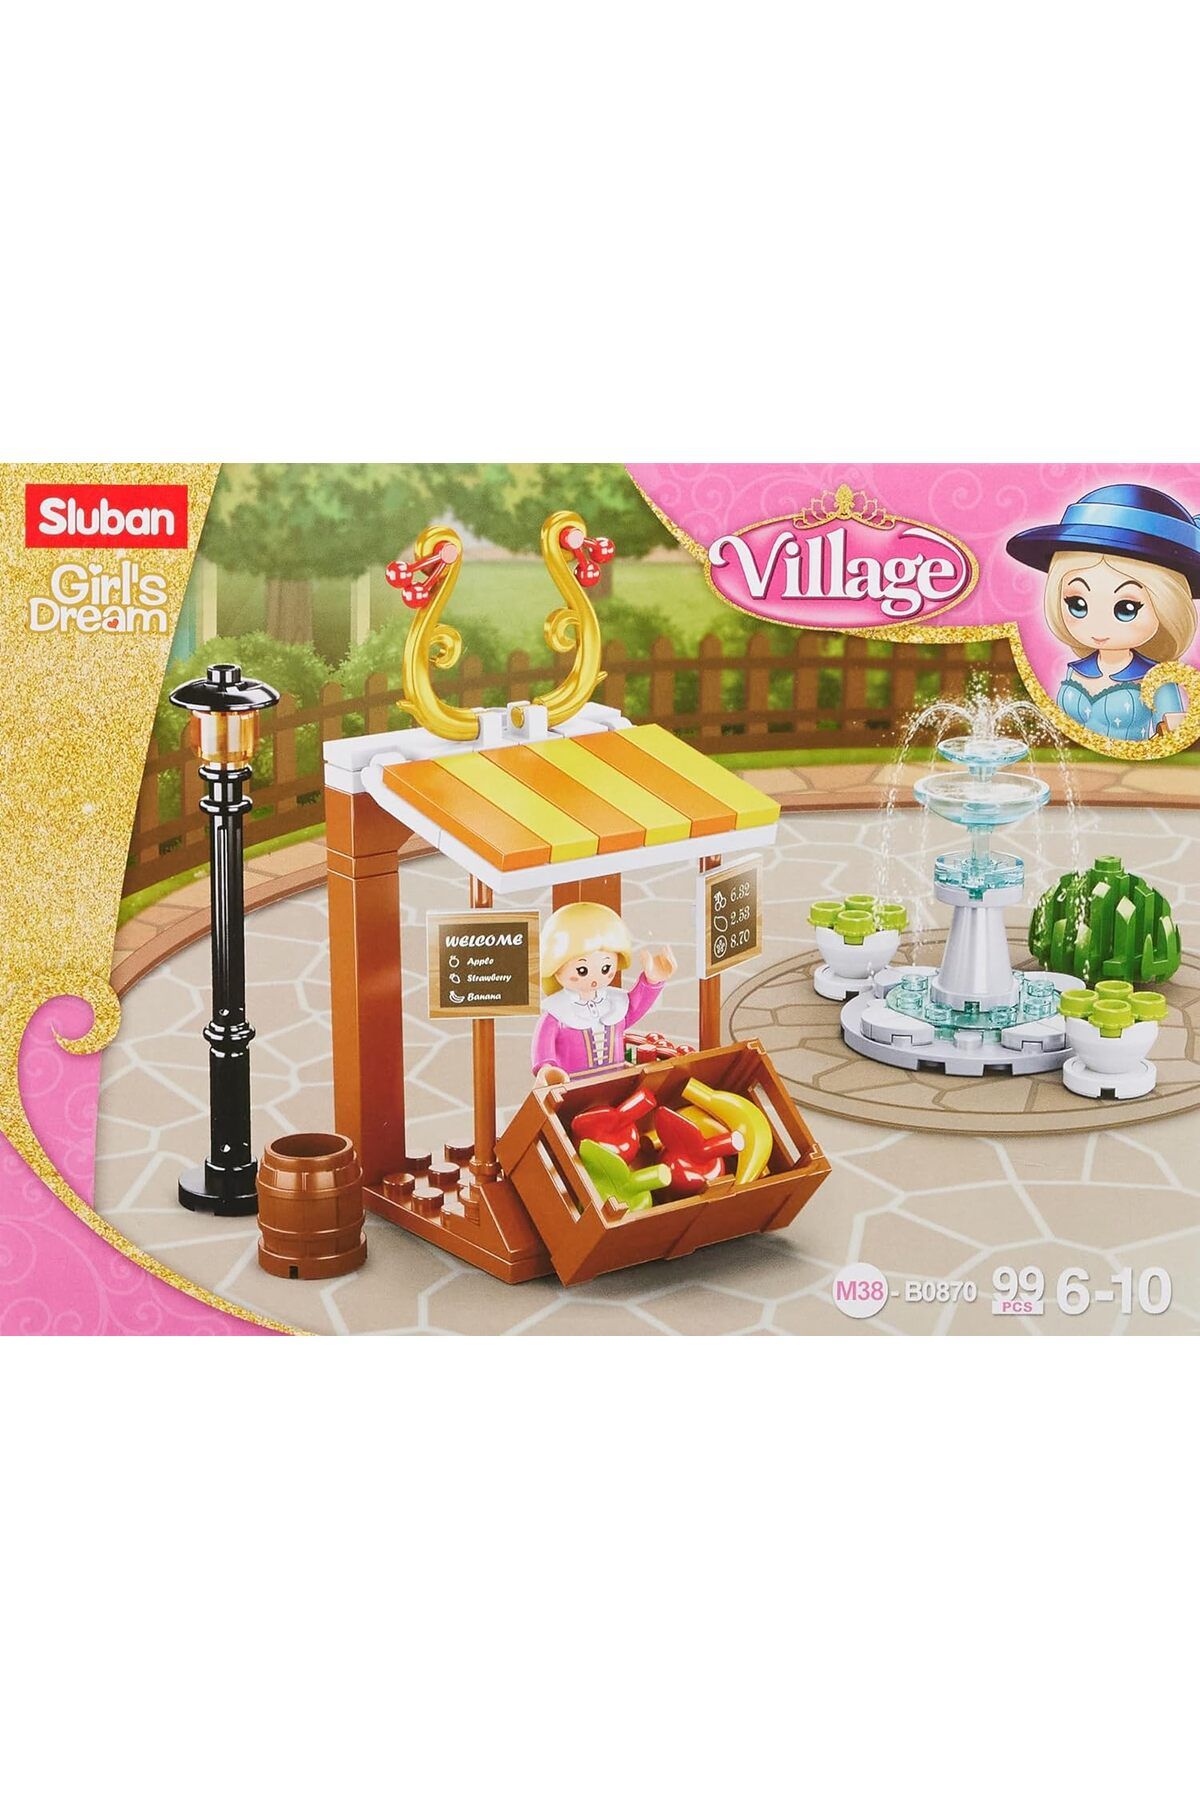 Sluban Girl's Dream Village Supermarket